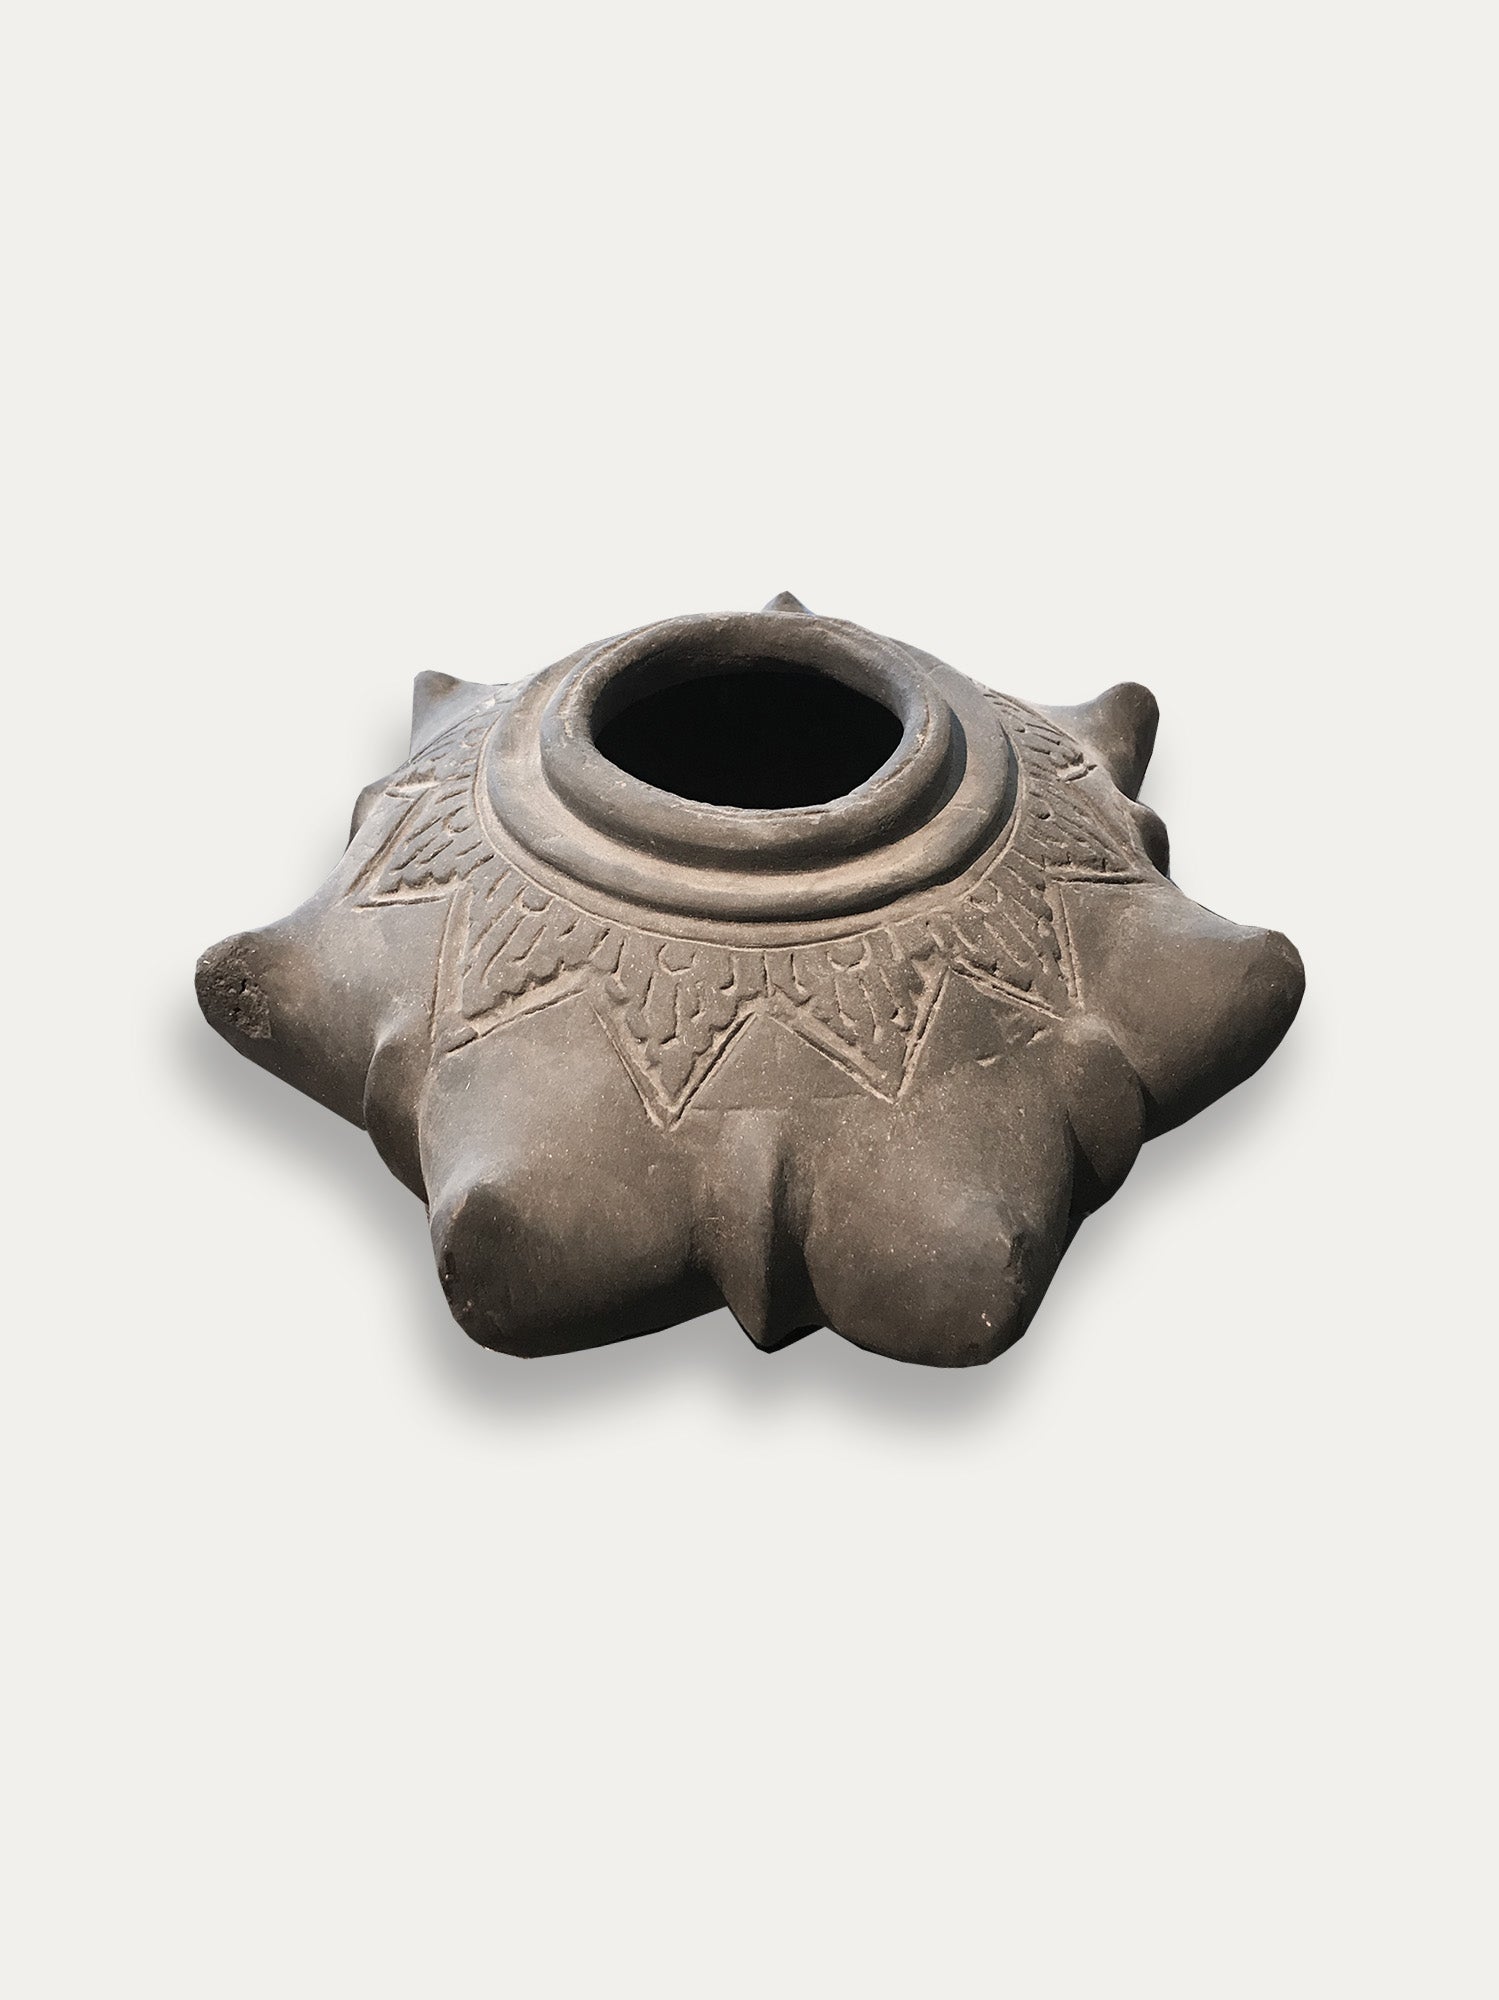 Terracotta Incense Urn from Java - Asian Art from Kirschon